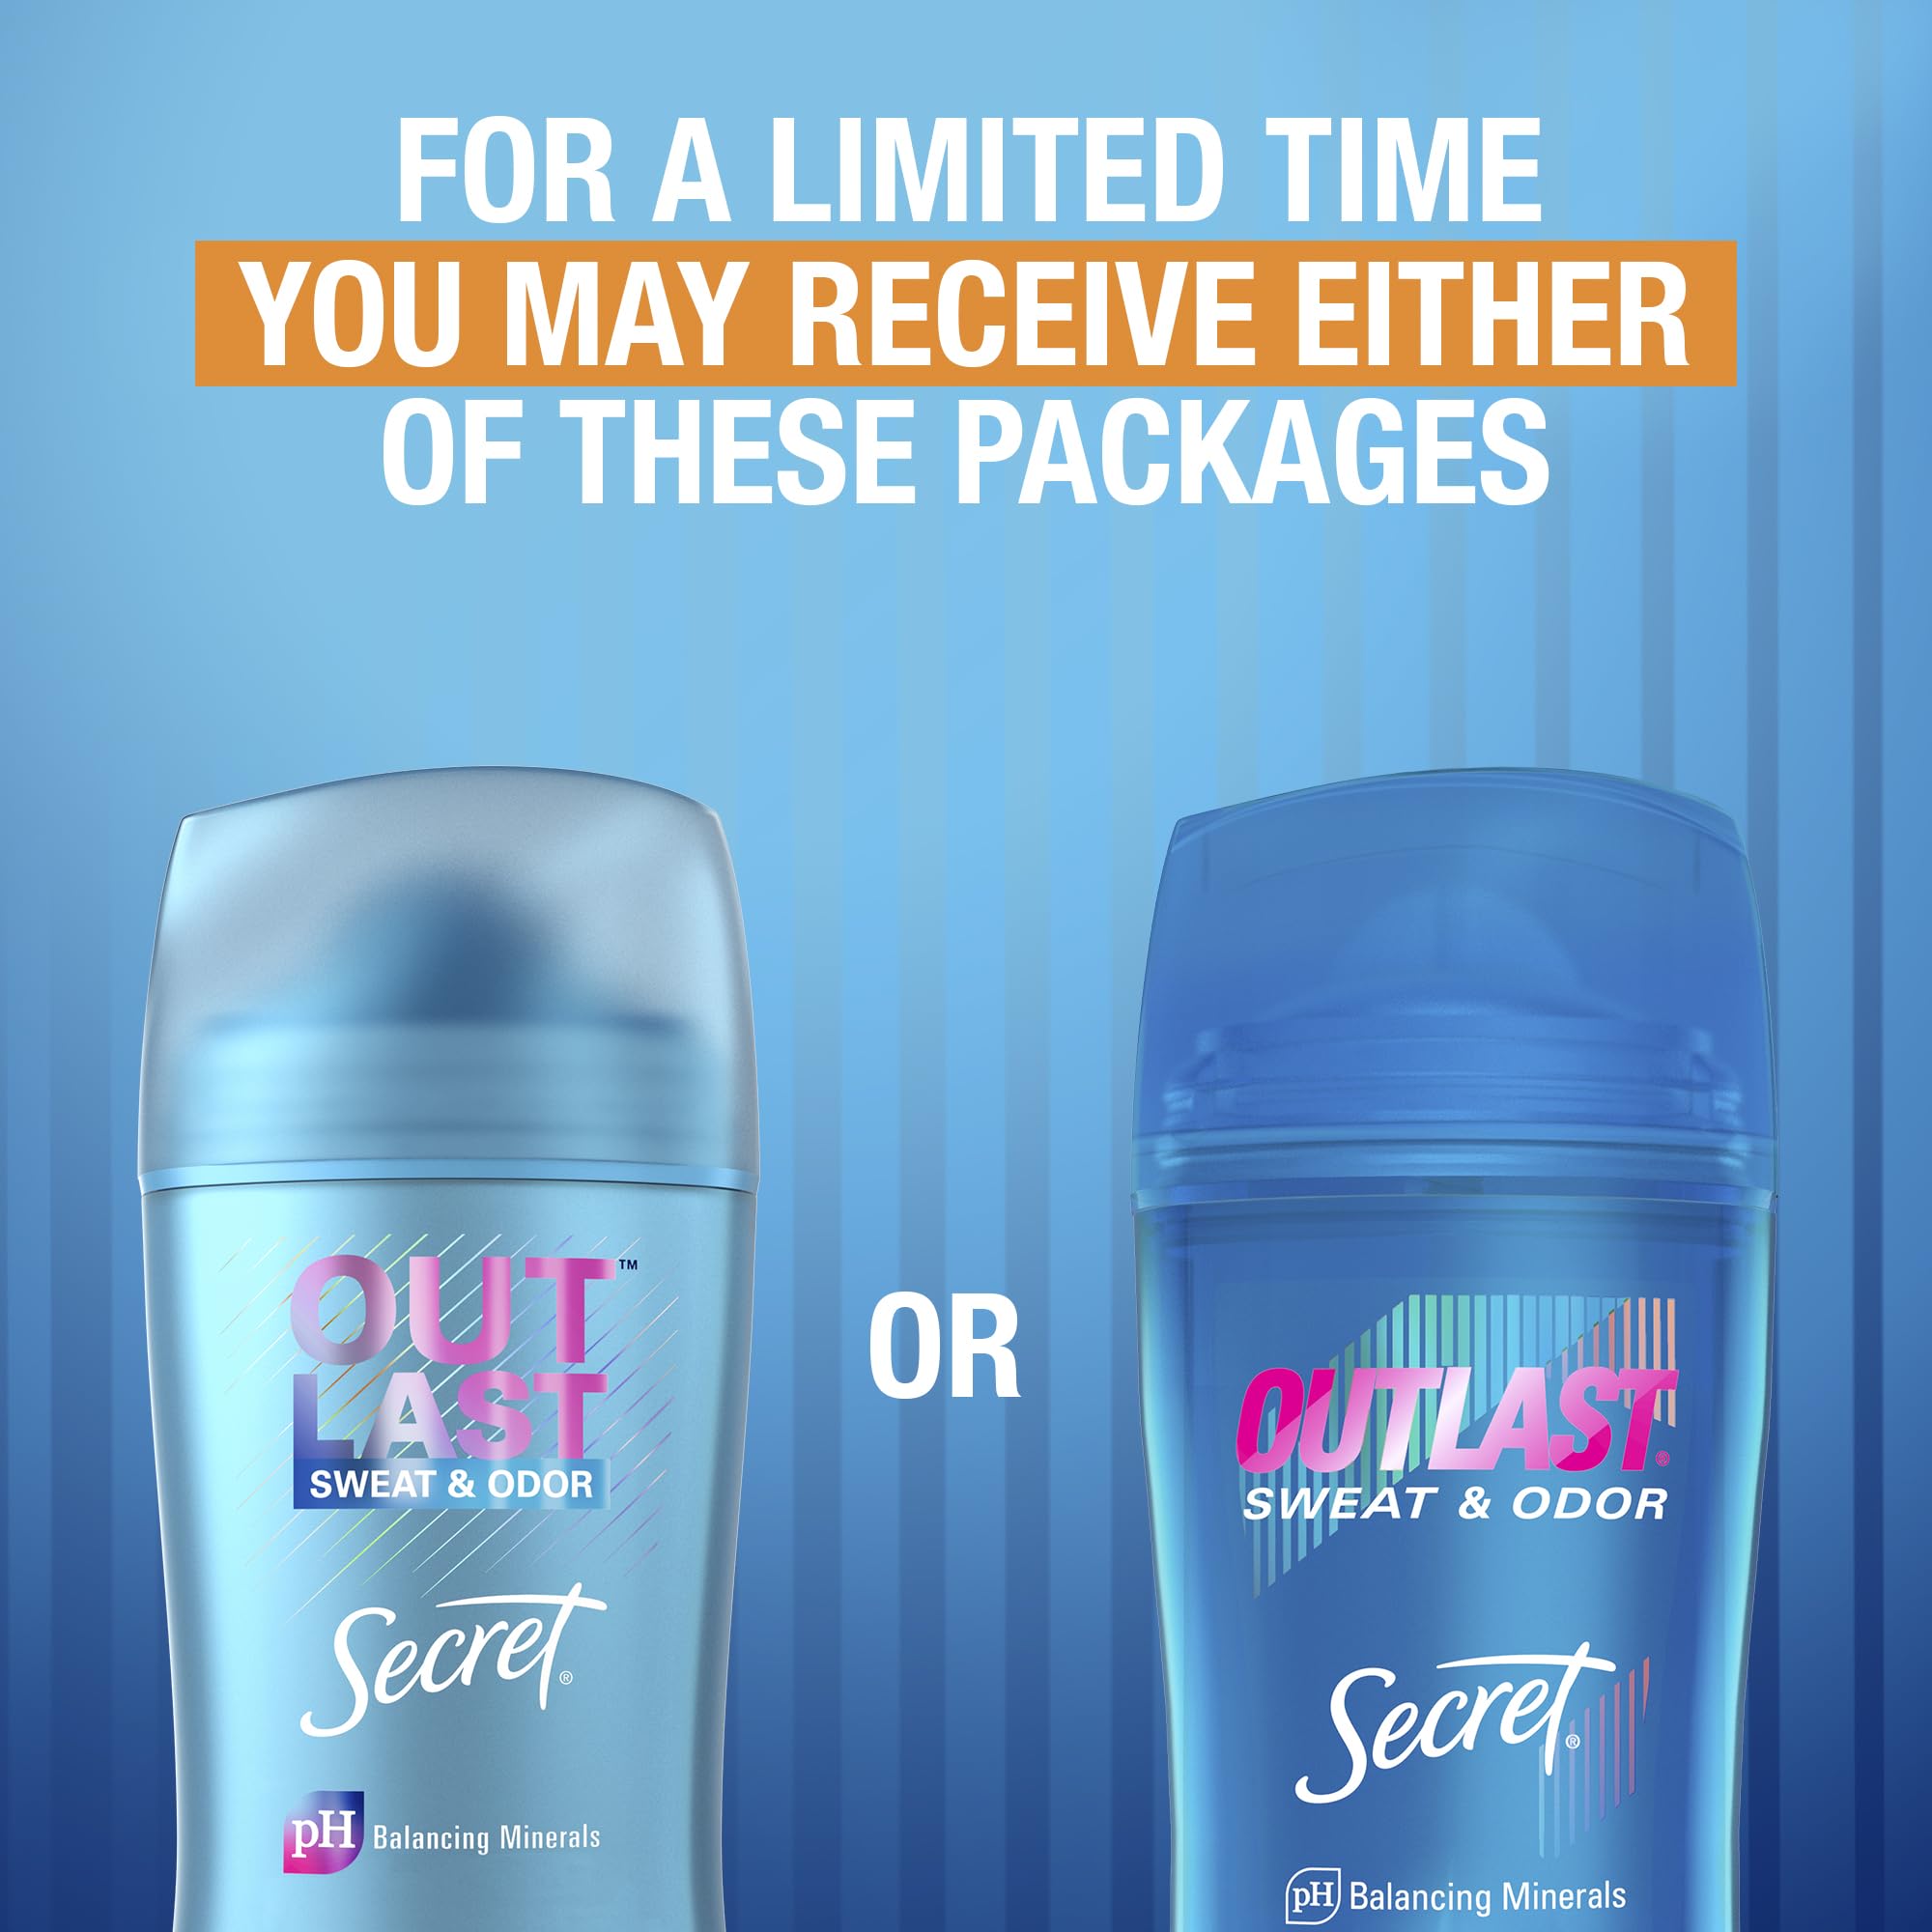 Secret Outlast Clear Gel Antiperspirant Deodorant for Women, Protecting Powder 2.6 oz